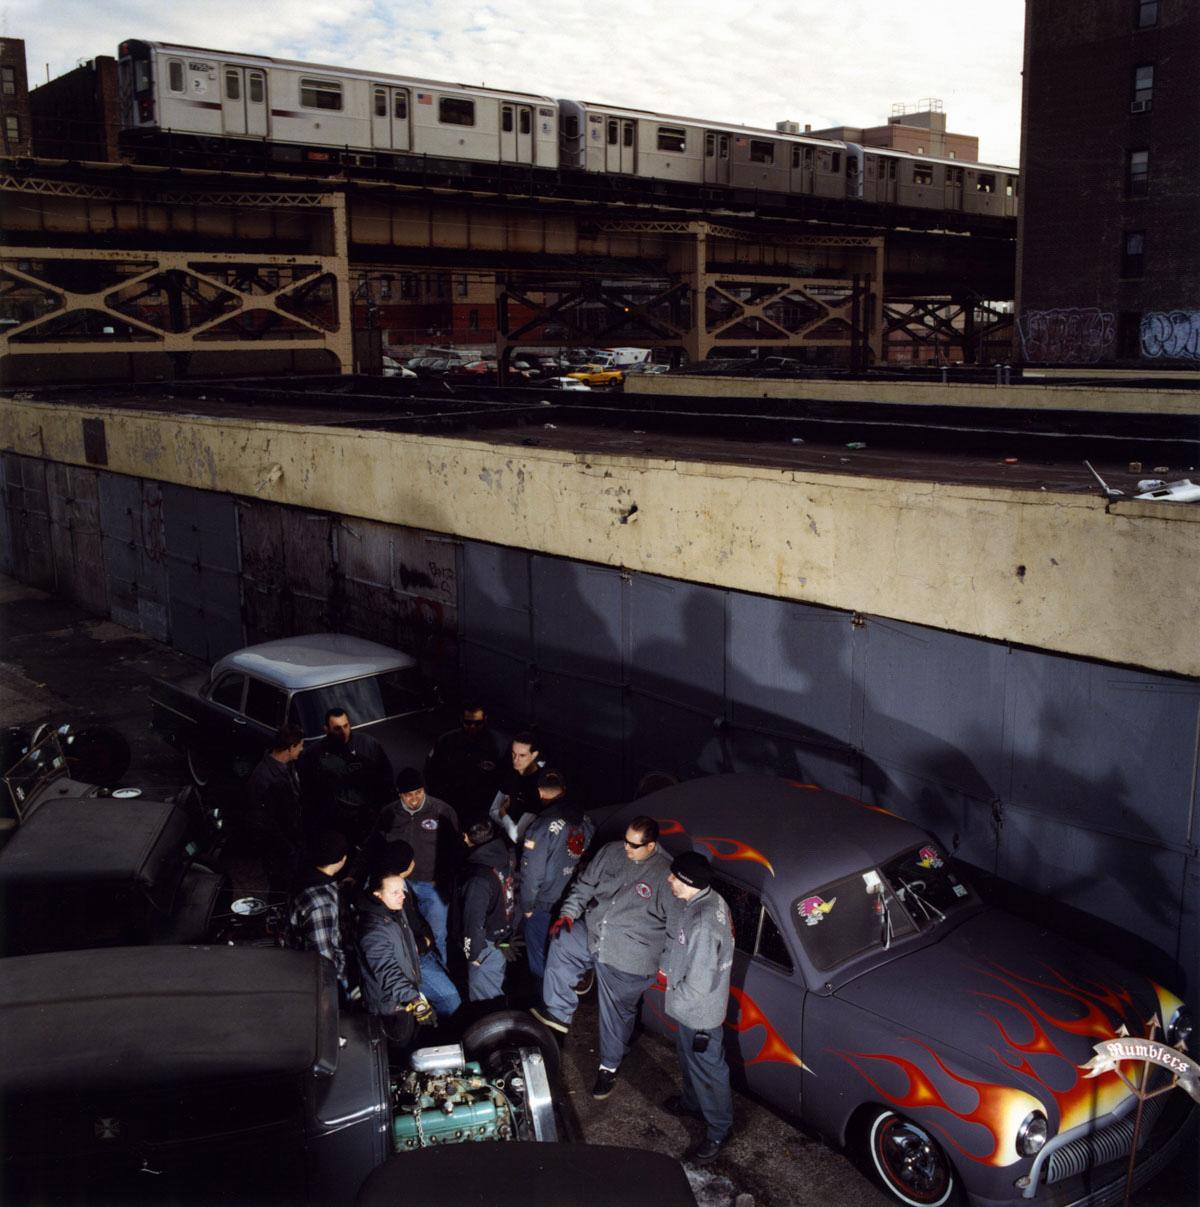 Brian Finke Color Photograph - Untitled (Rumblers no. 1)